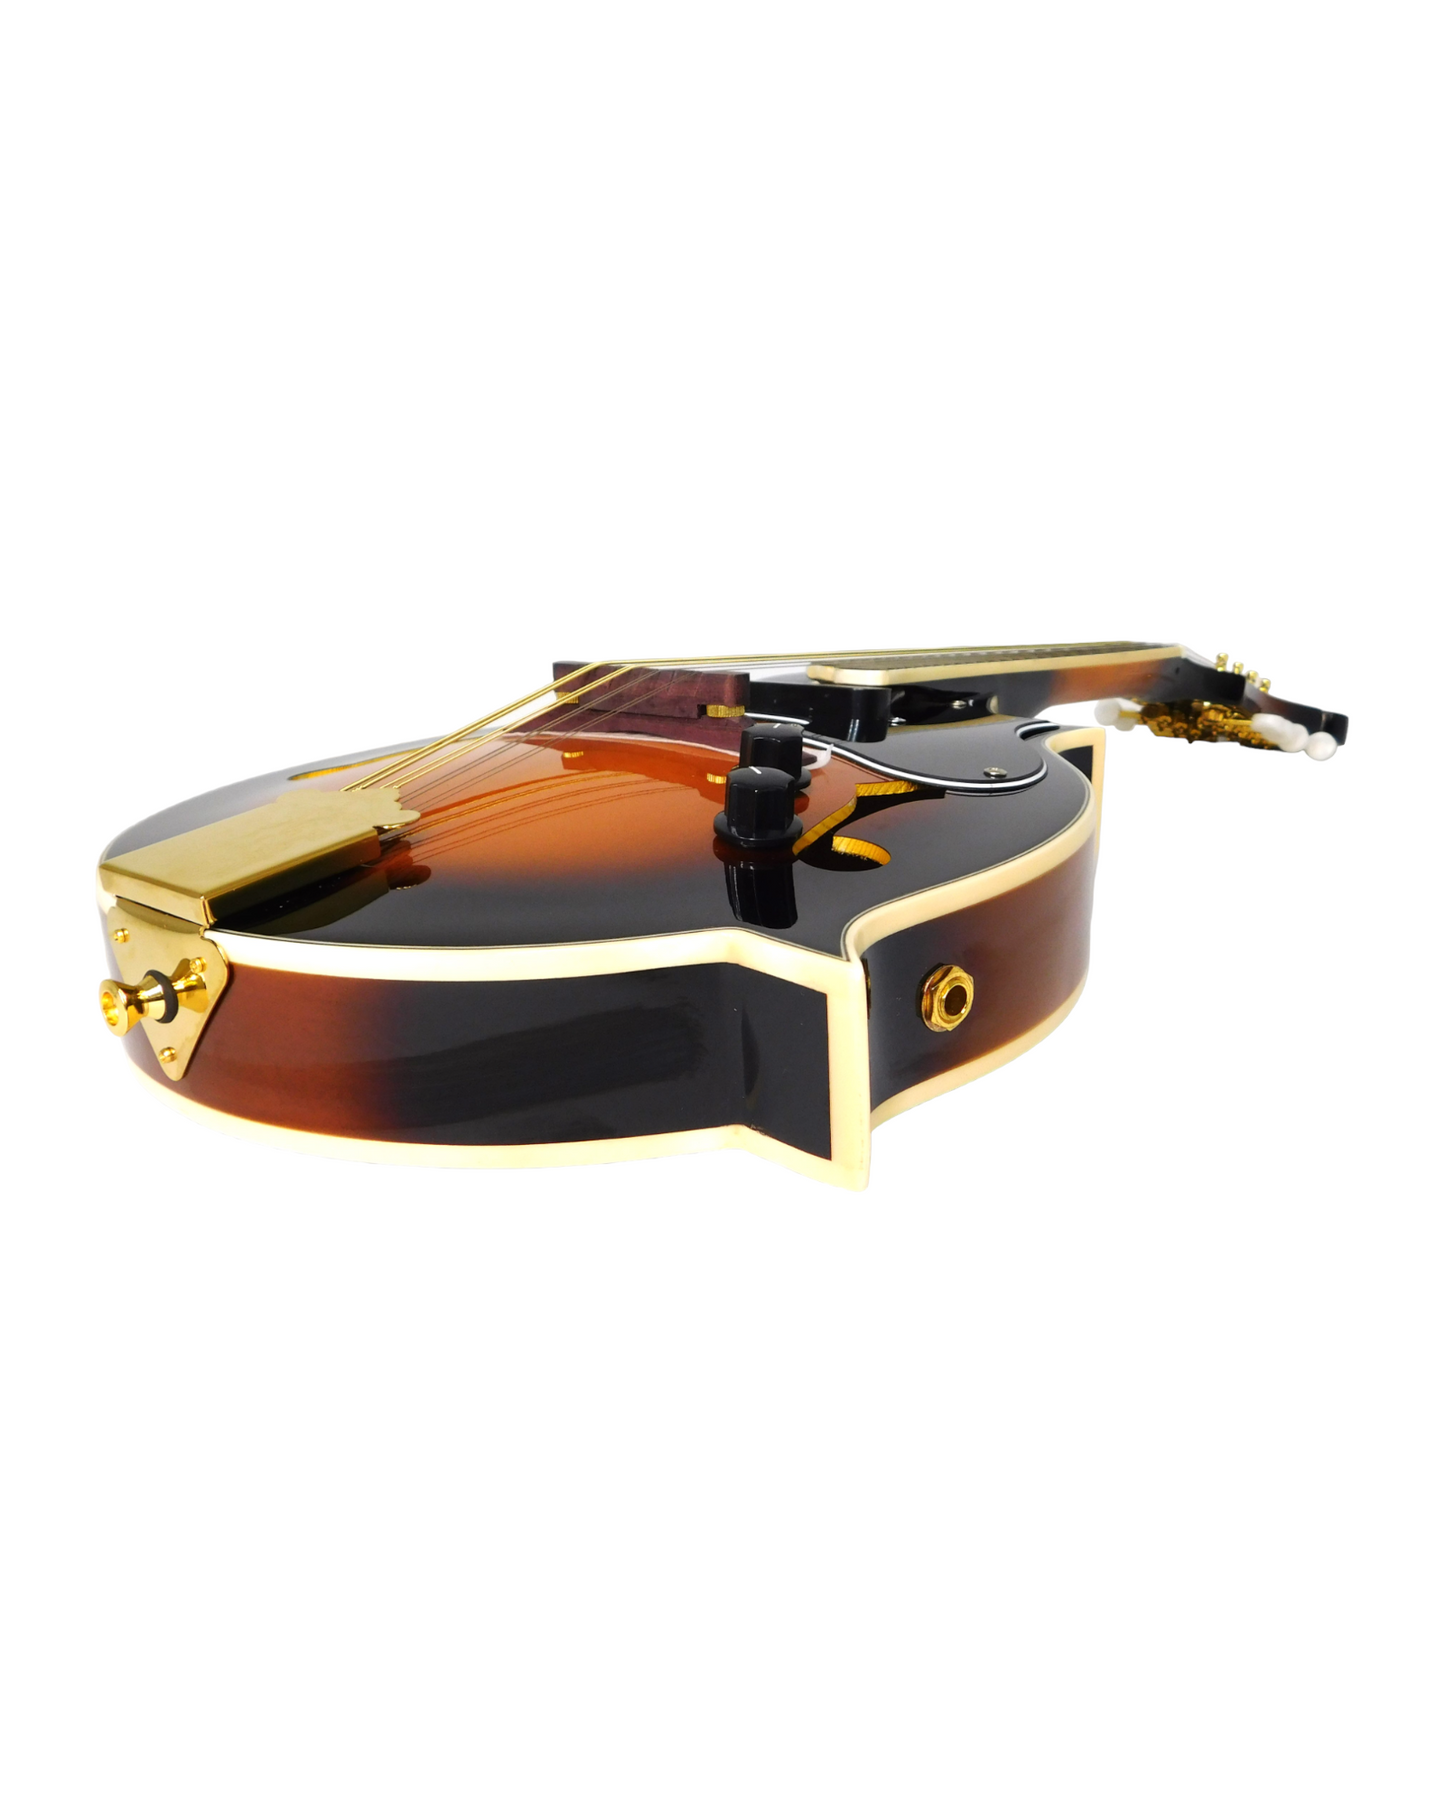 Caraya MA008EQVS F-Style Solid Top Electric-Mandolin, Vintage Sunburst + Free Gig Bag and strings